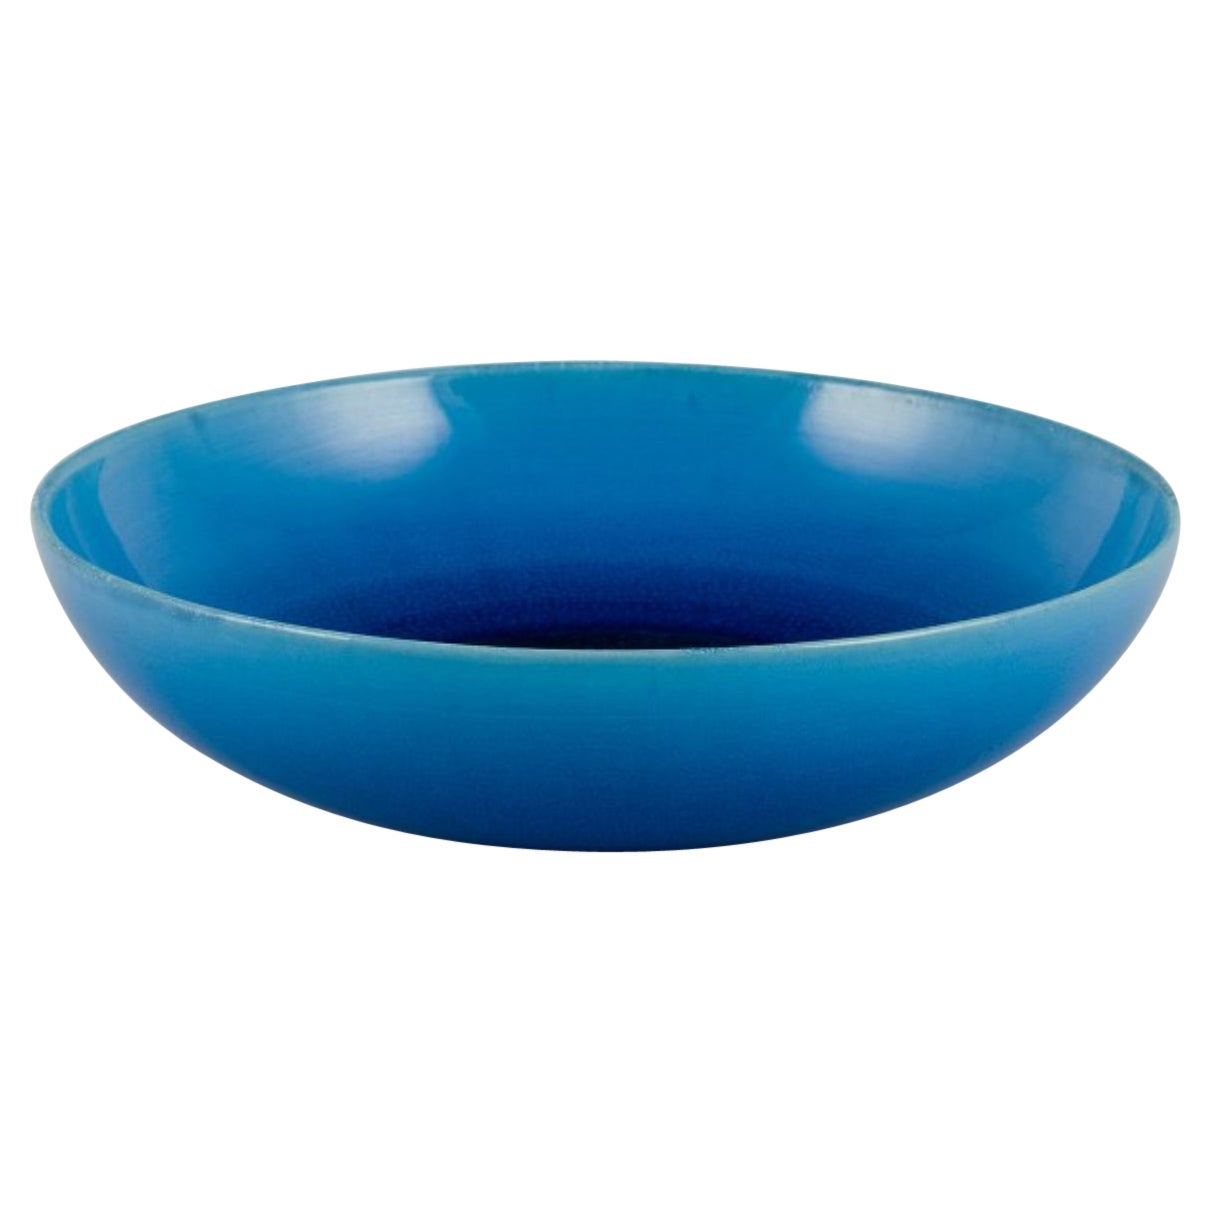 Carl Harry Stålhane, Rörstrand. Ceramic bowl in turquoise glaze. Mid-20th C. For Sale